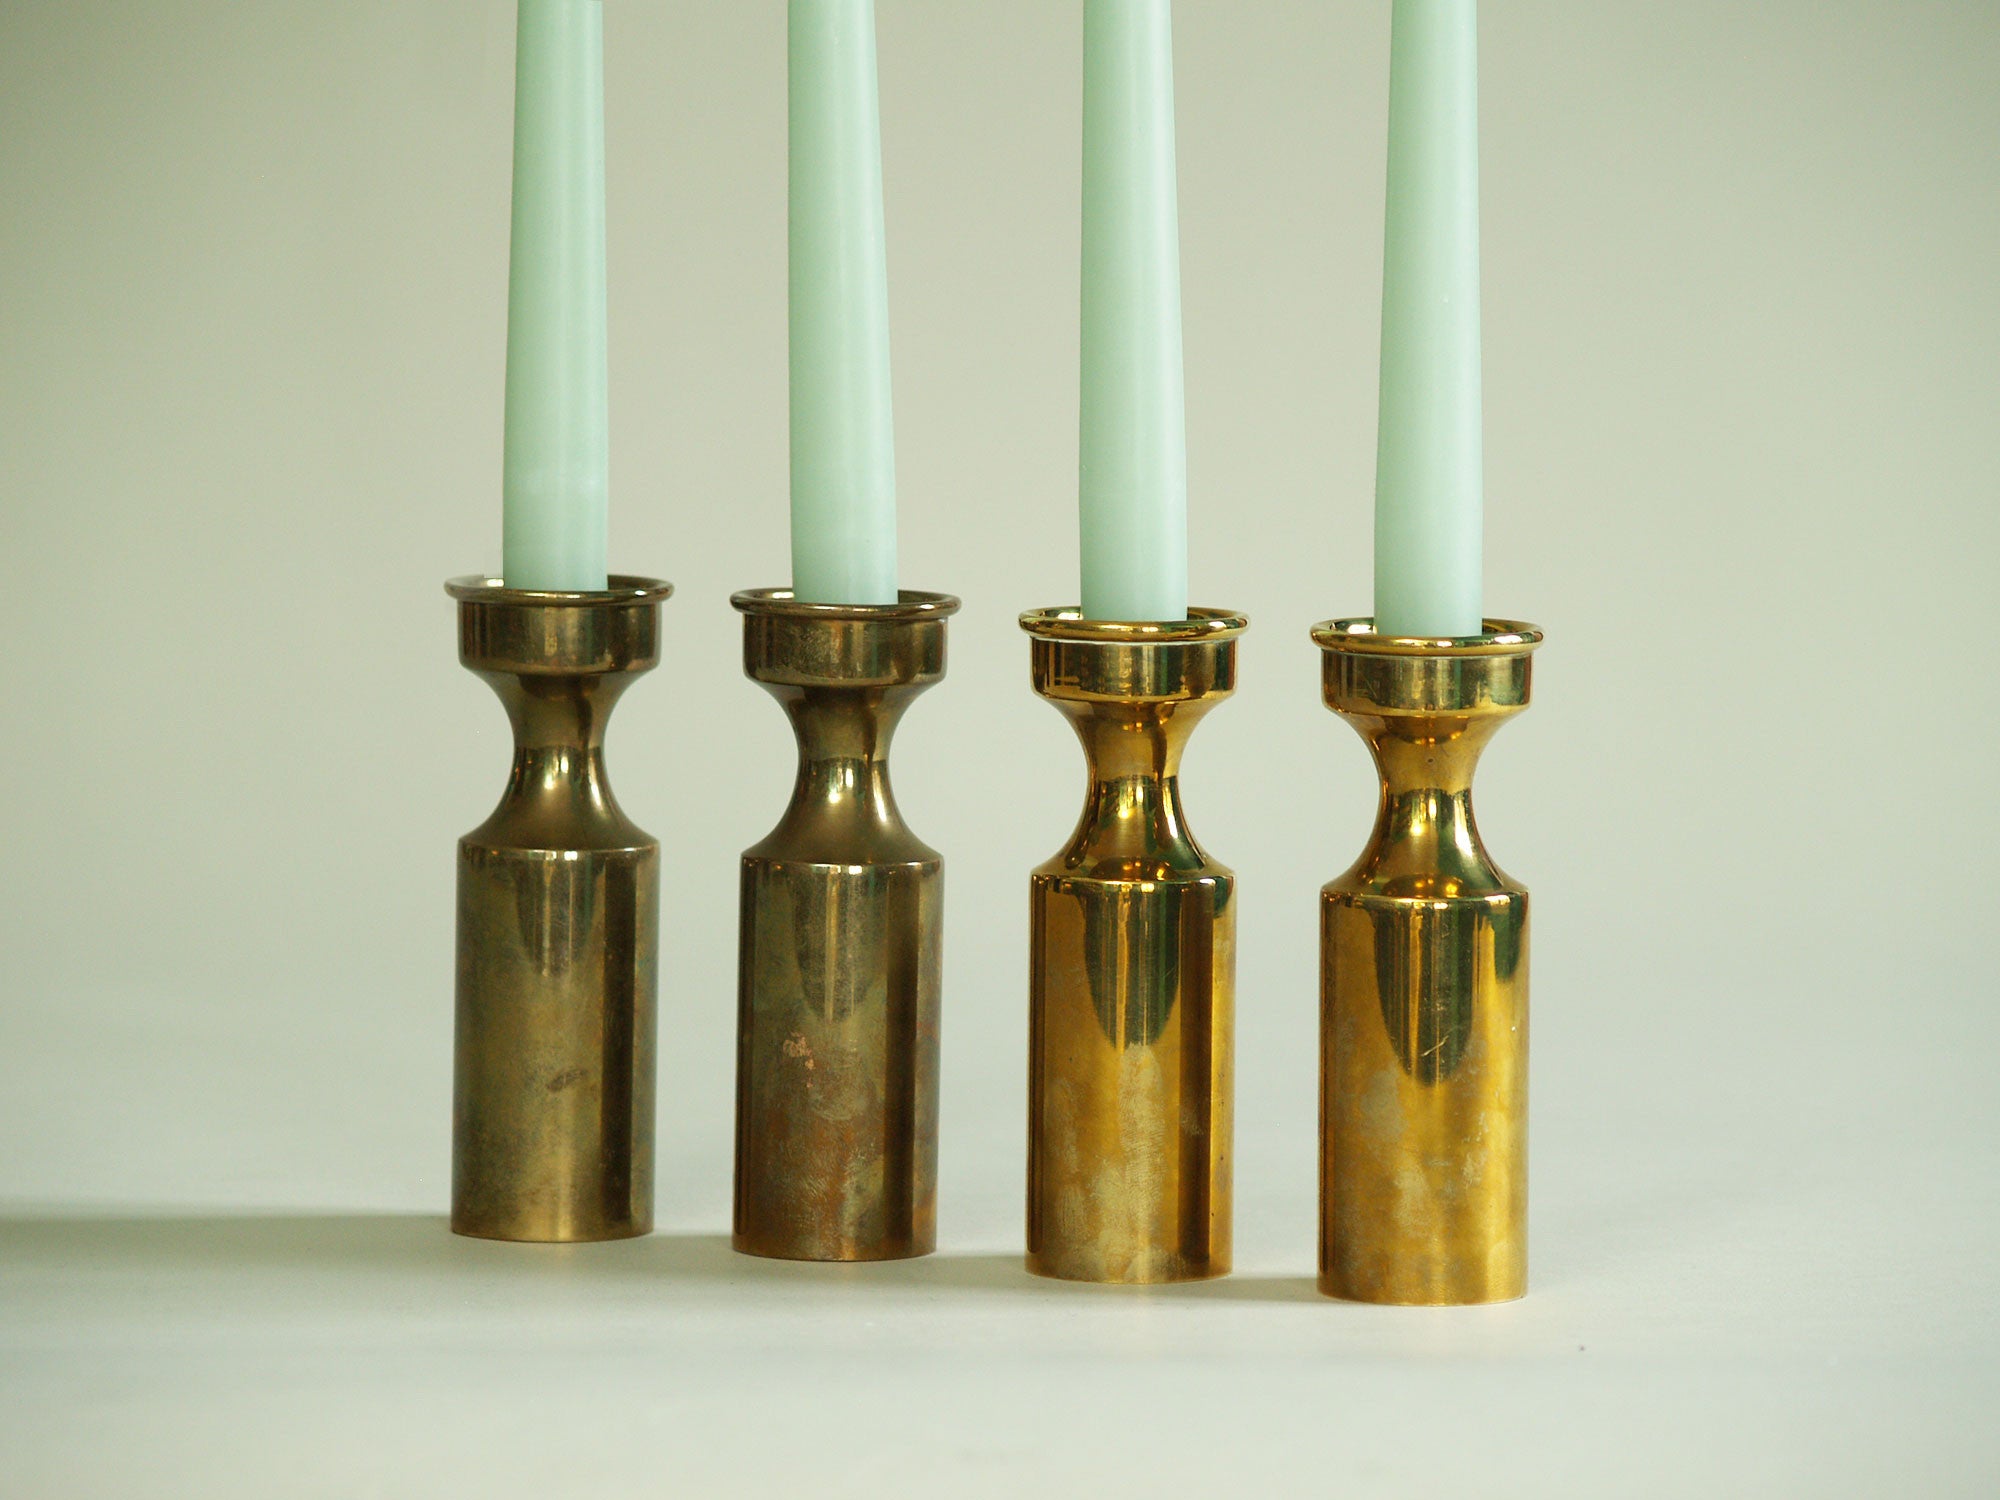 Série de quatre flambeaux modernistes par Boyes Metalkunst, Danemark (vers 1950)..Set of 4 modernist Candle holders by Boyes Metalkunst, Denmark (circa 1950)